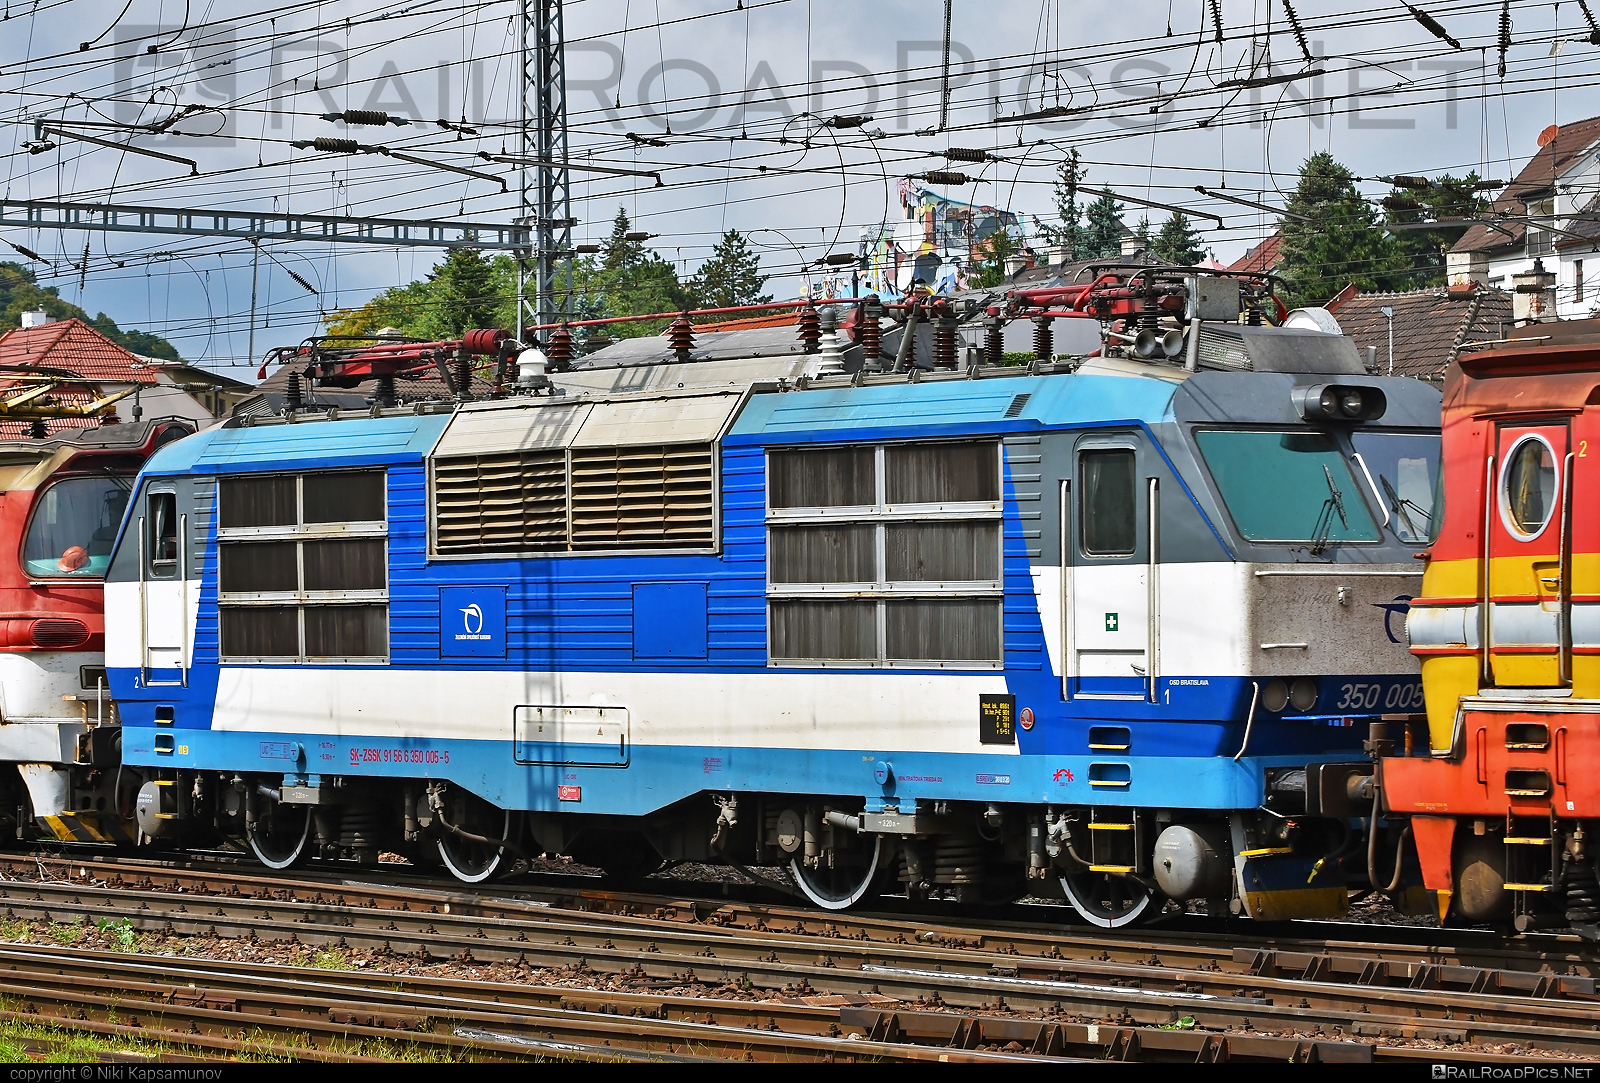 Škoda 55E - 350 005-5 operated by Železničná Spoločnost' Slovensko, a.s. #ZeleznicnaSpolocnostSlovensko #gorila #locomotive350 #skoda #skoda55e #zssk